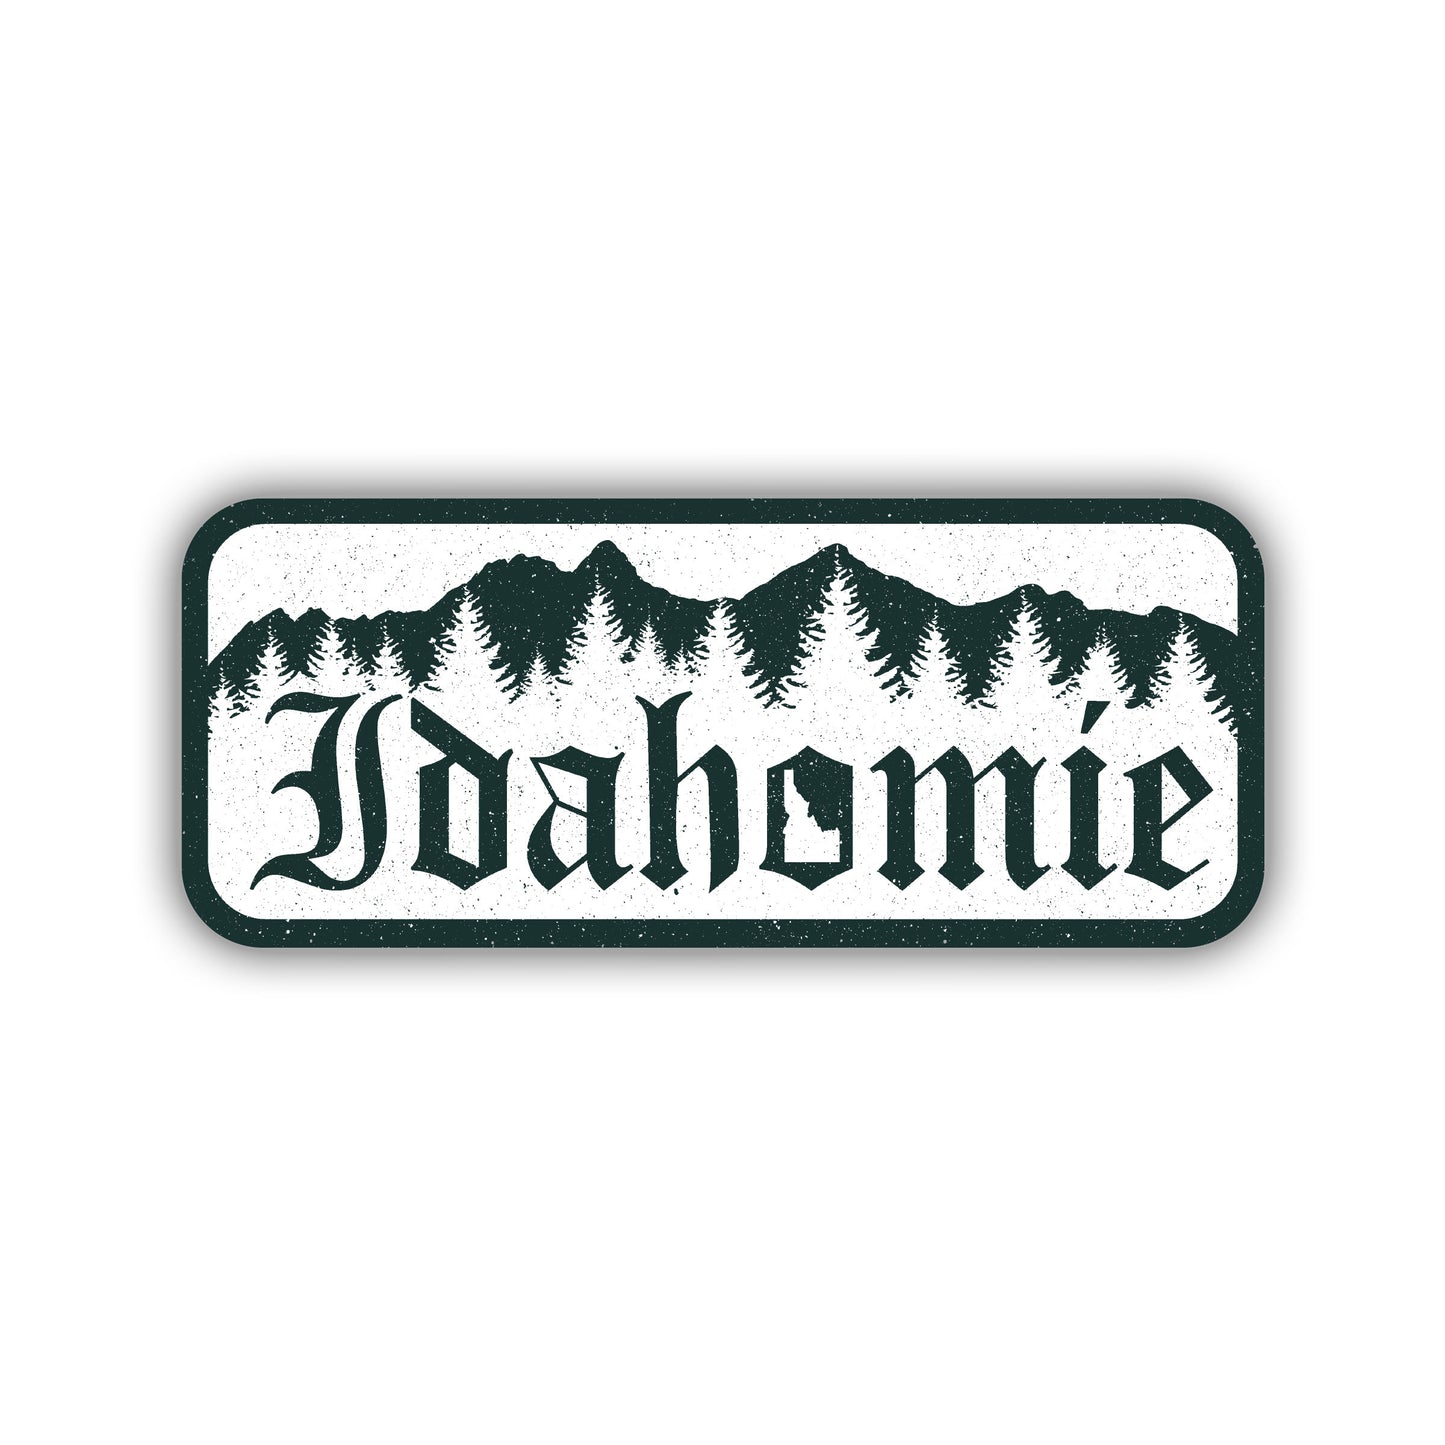 Idahomie Vinyl Sticker